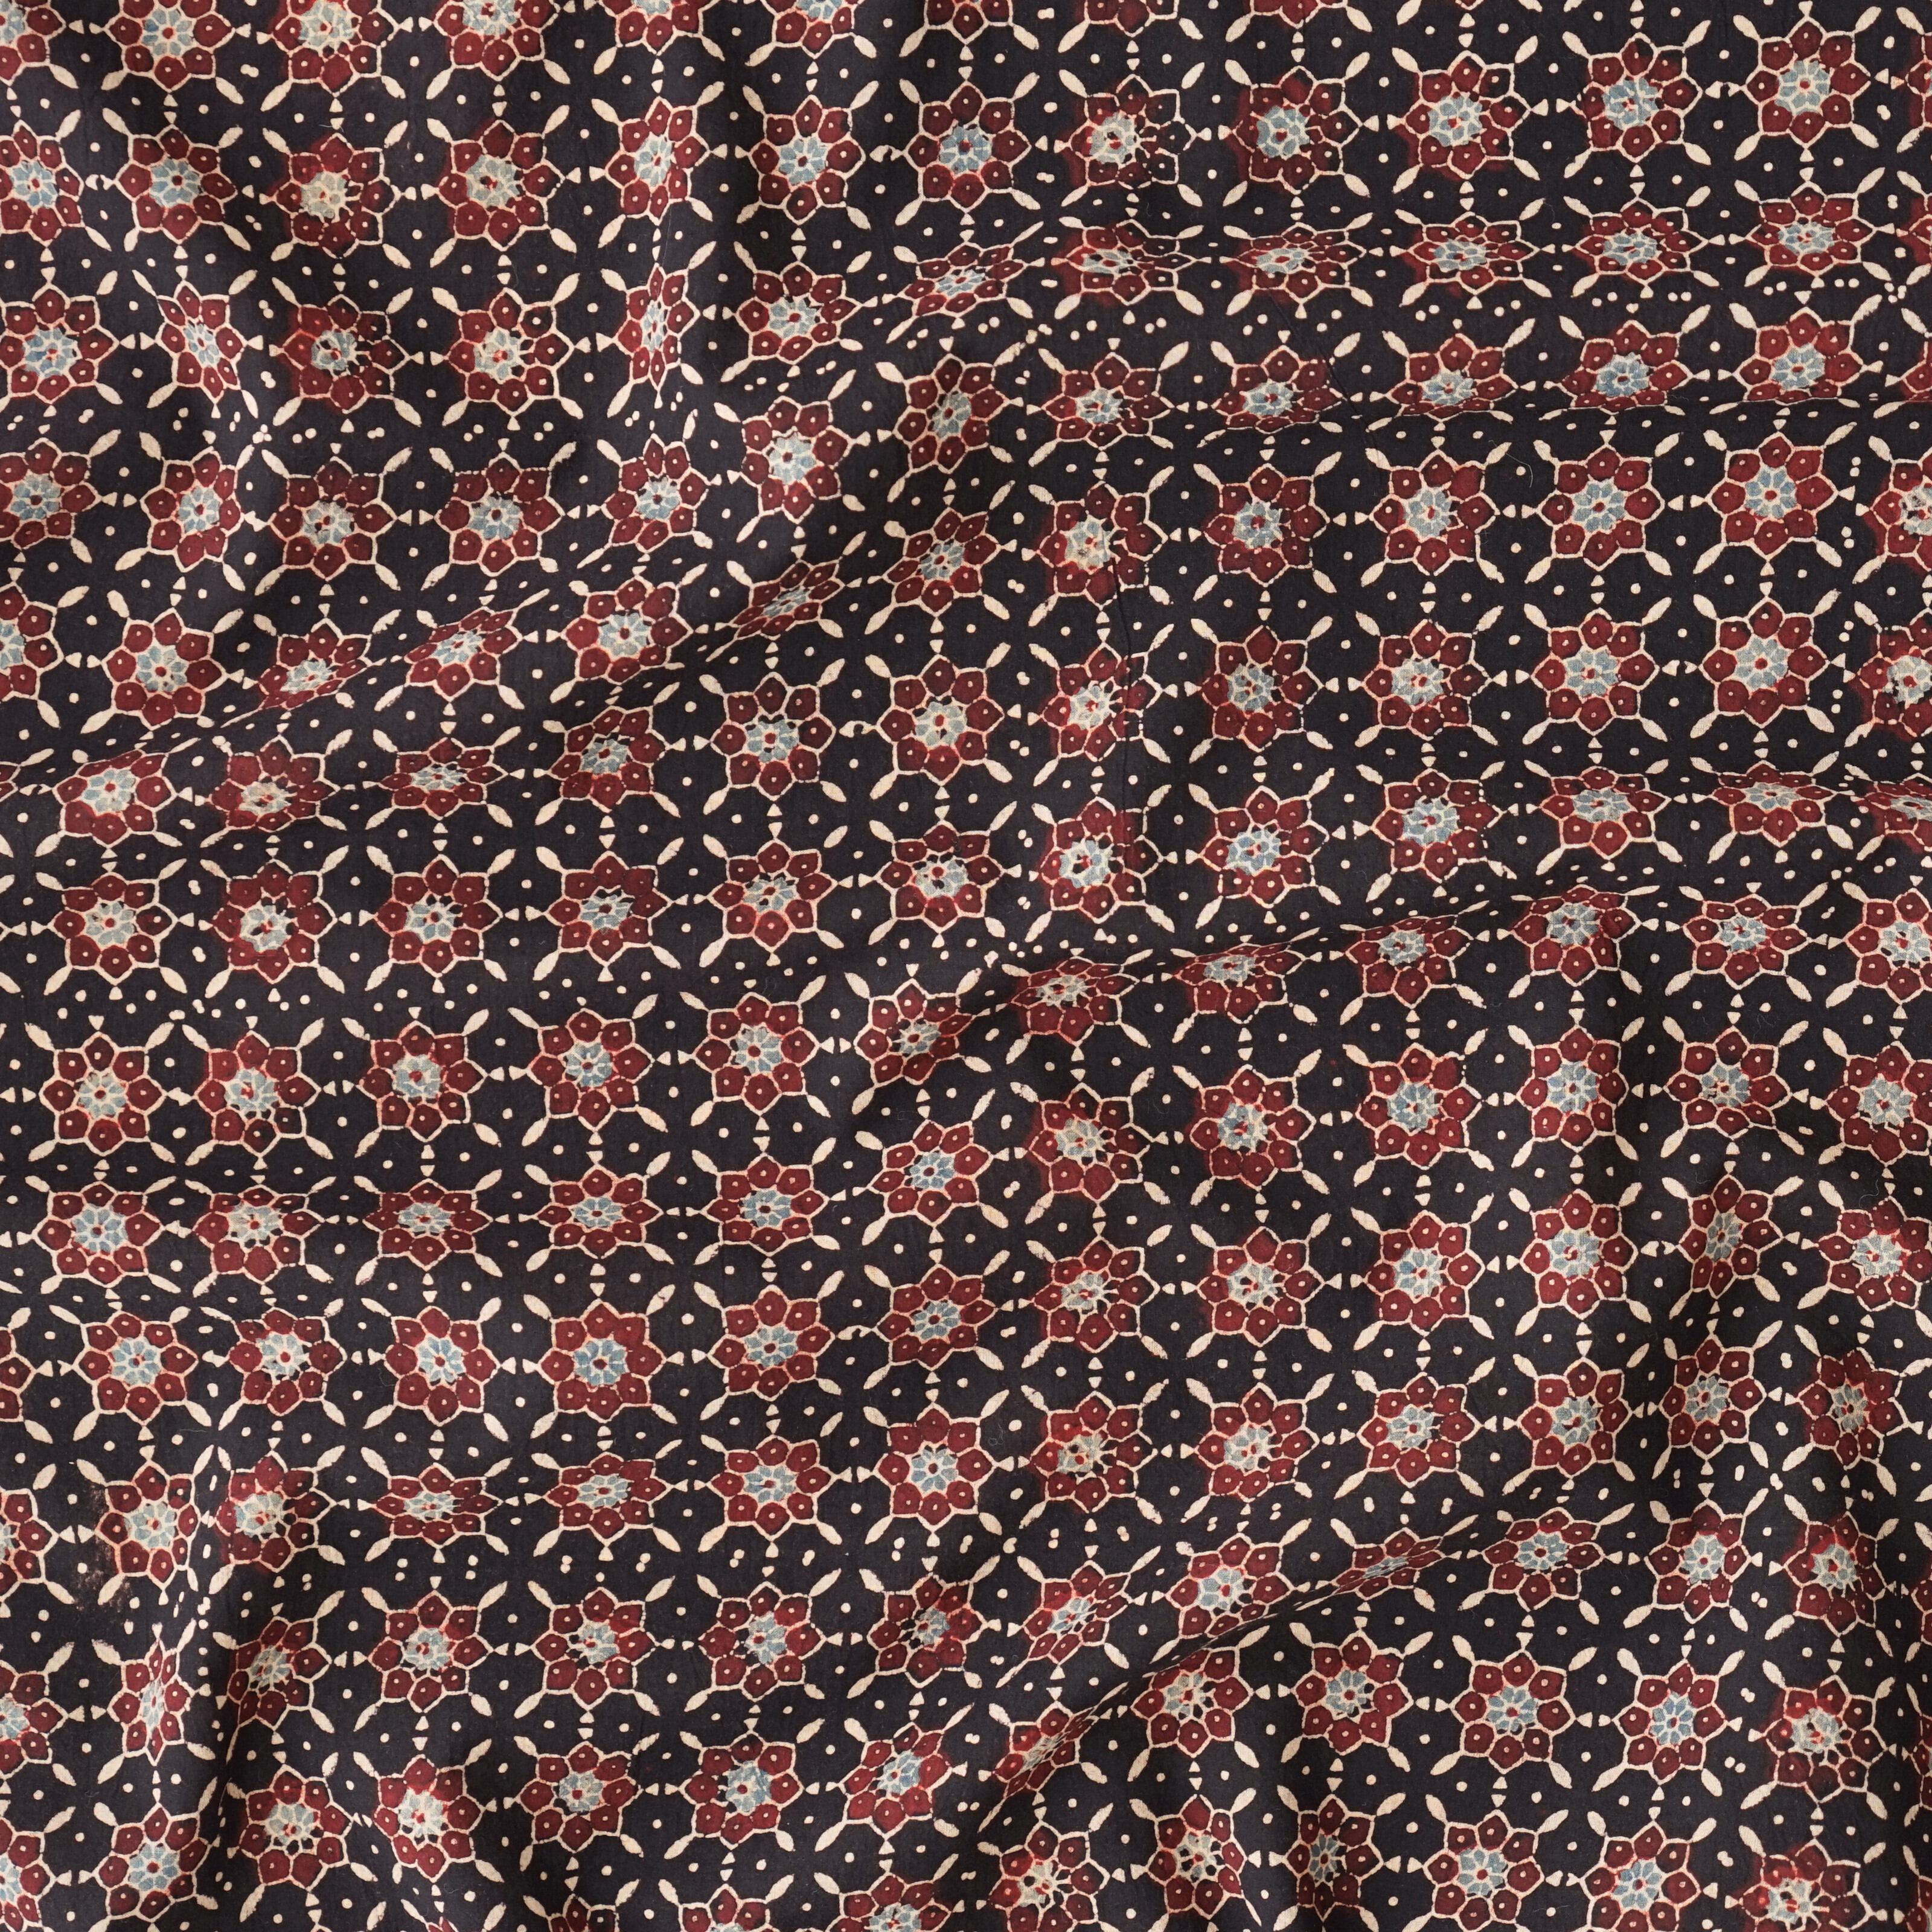 Ajrak Block-Printed Cotton - Starburst Print - Iron Black, Alizarin Red, Indigo - Contrast